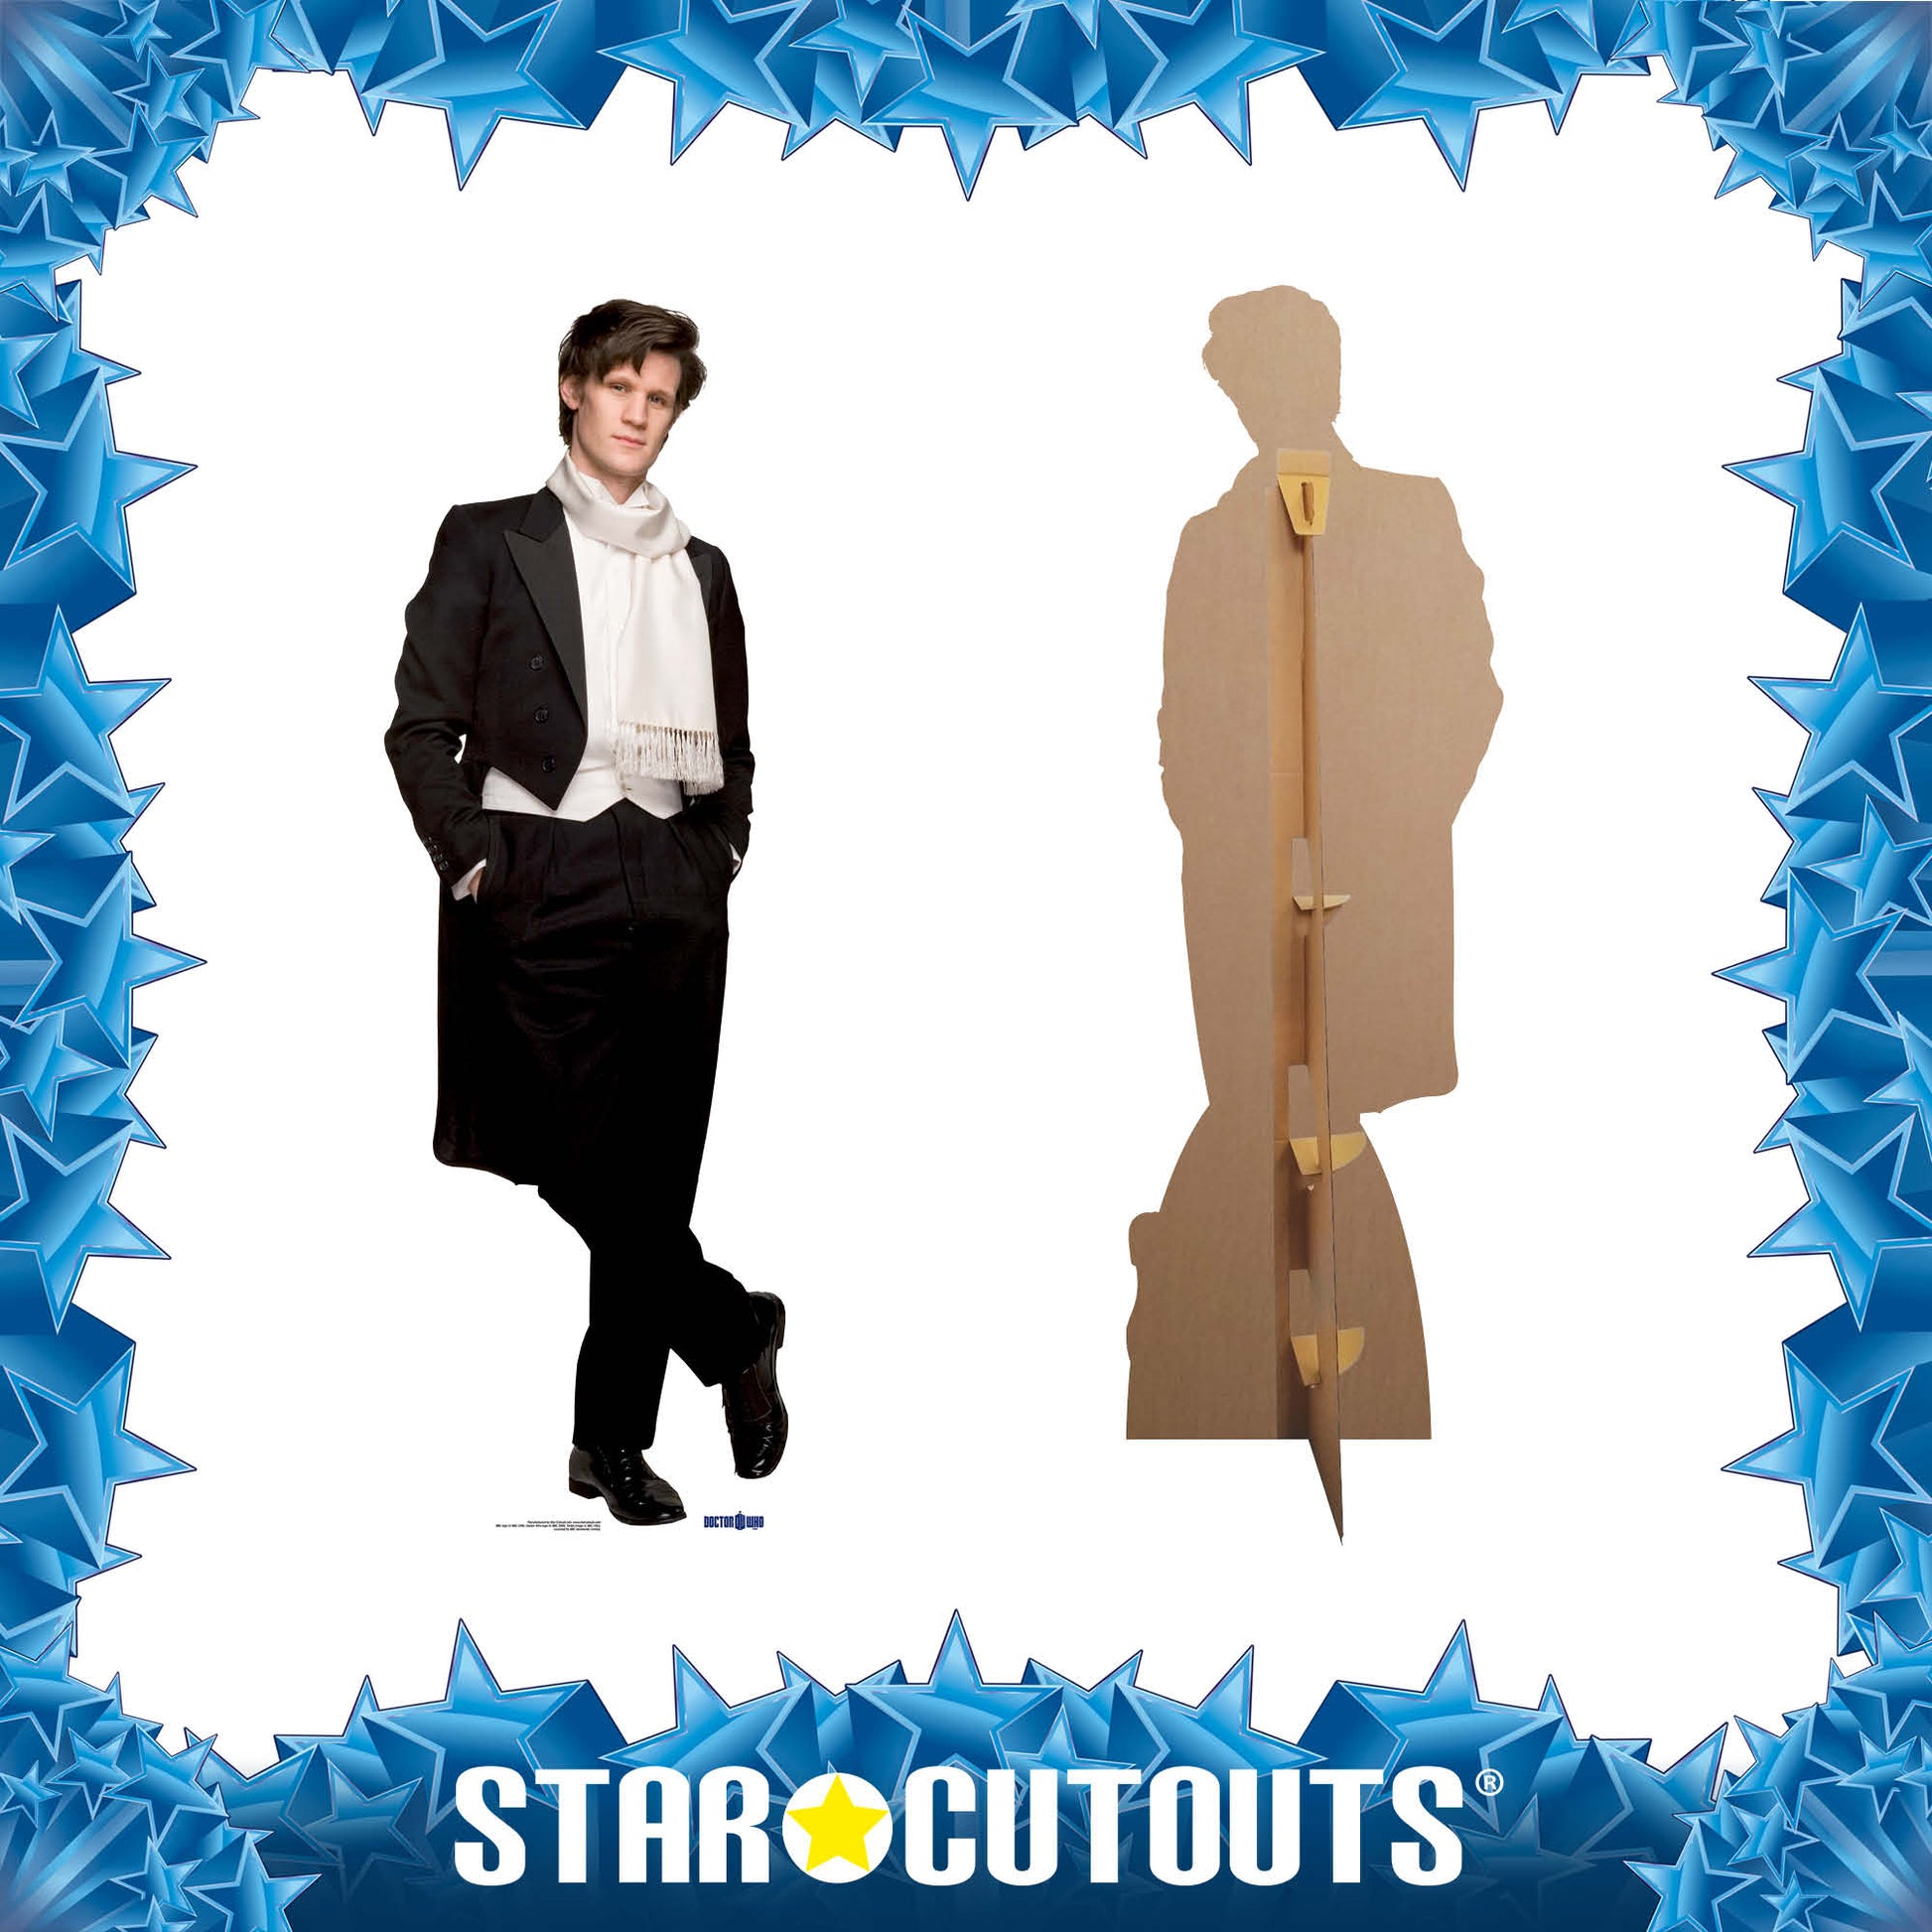 The 11th Doctor  Wedding Suit Cardboard Cutout MyCardboardCutout